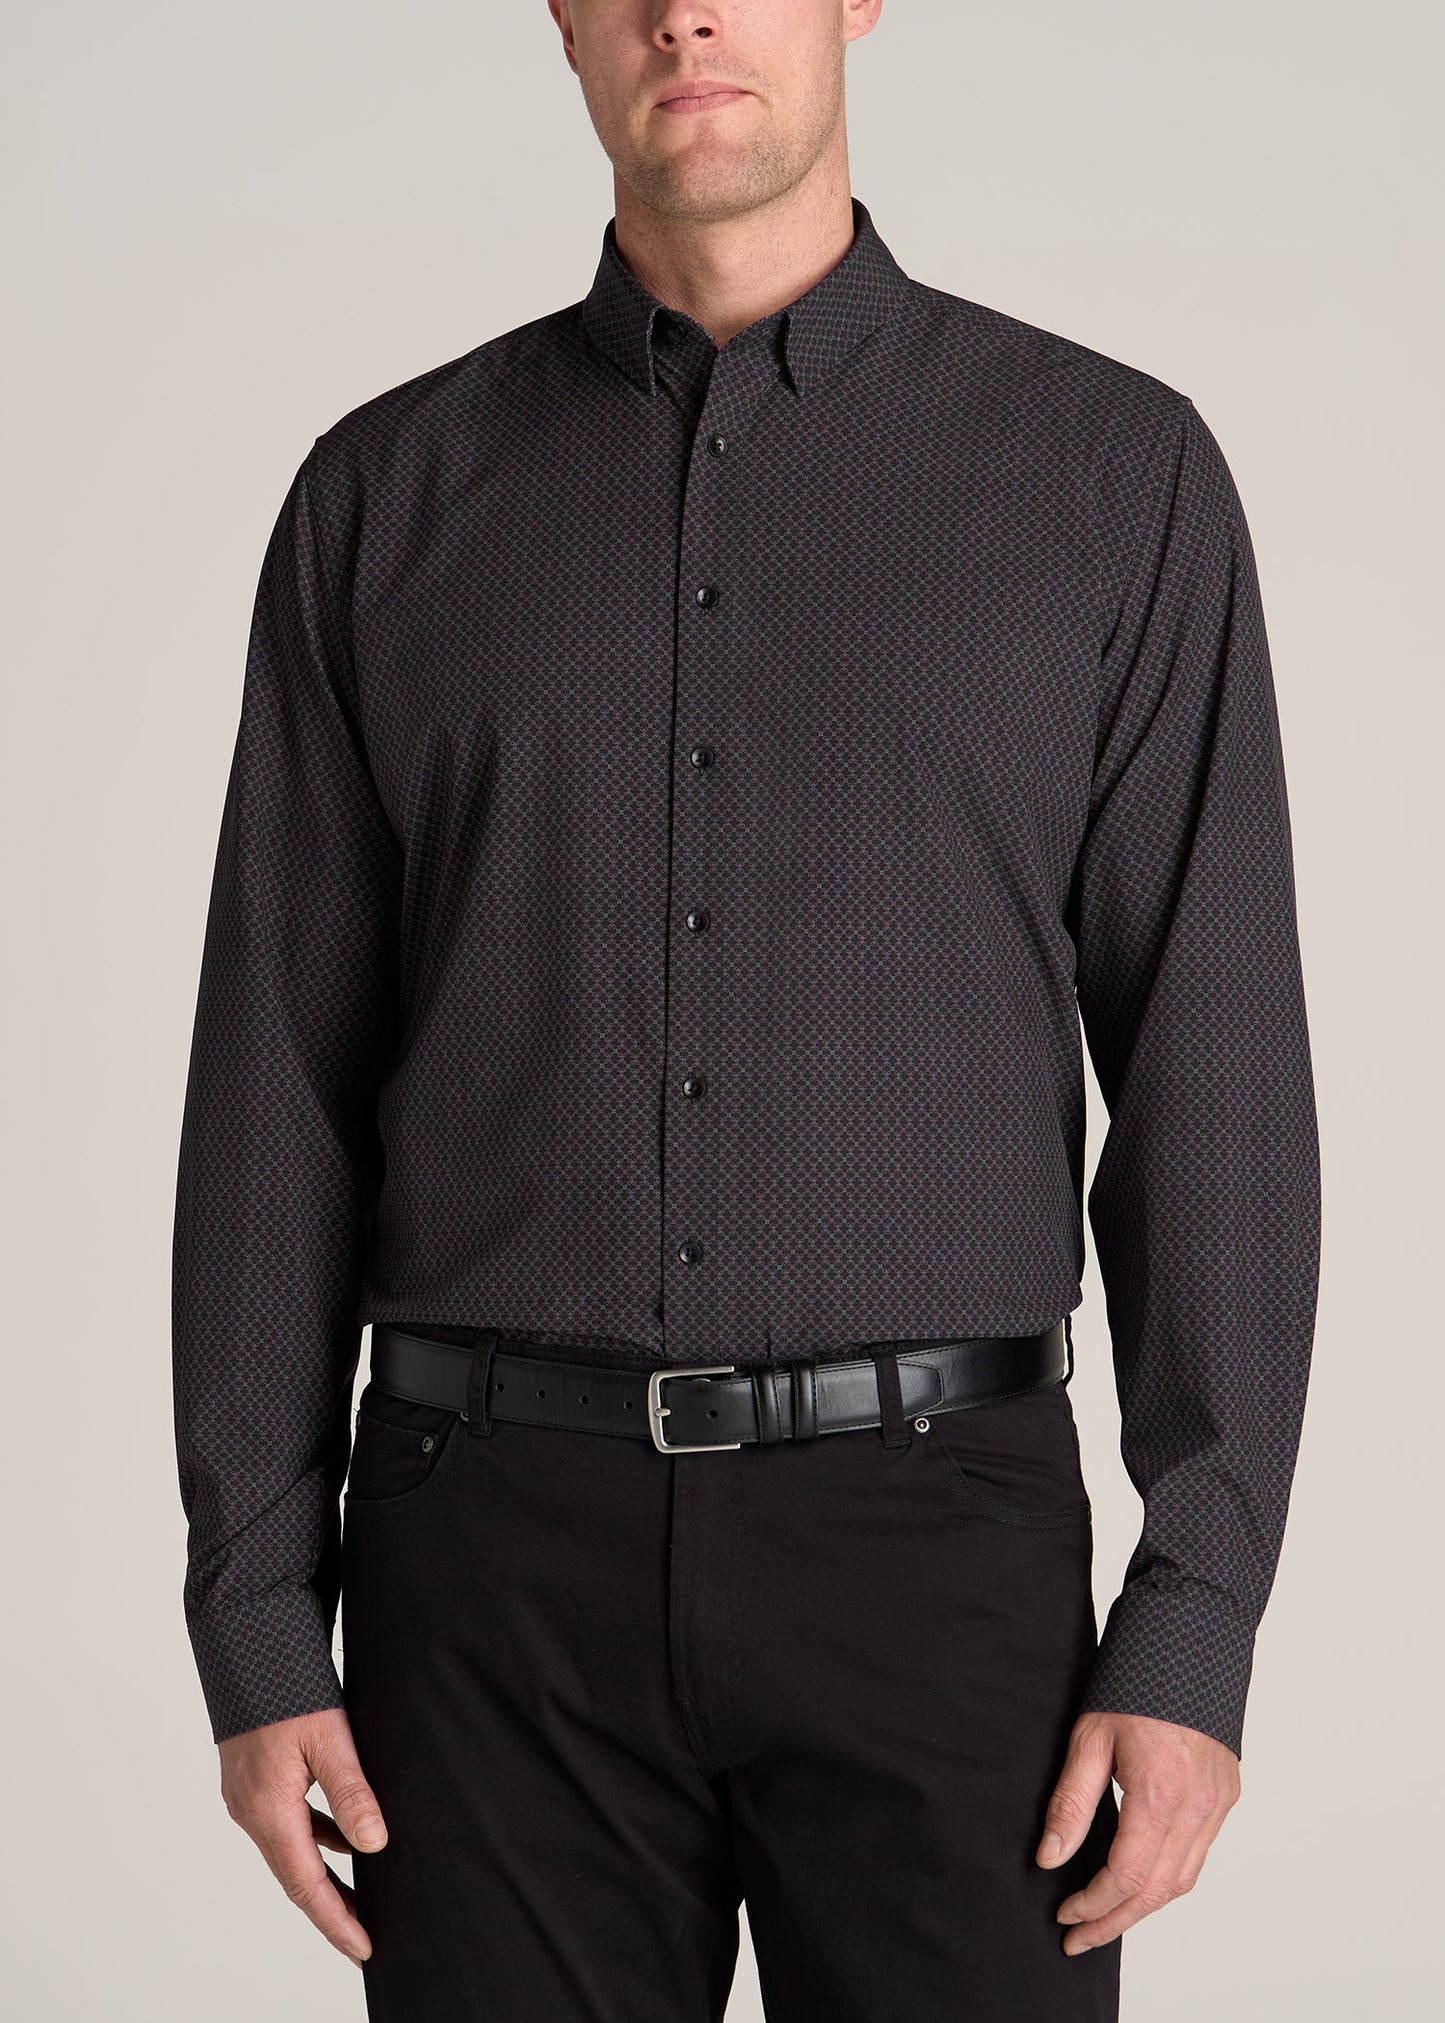 American-Tall-Men-Traveler-Stretch-Dress-Shirt-Black-Multi-front